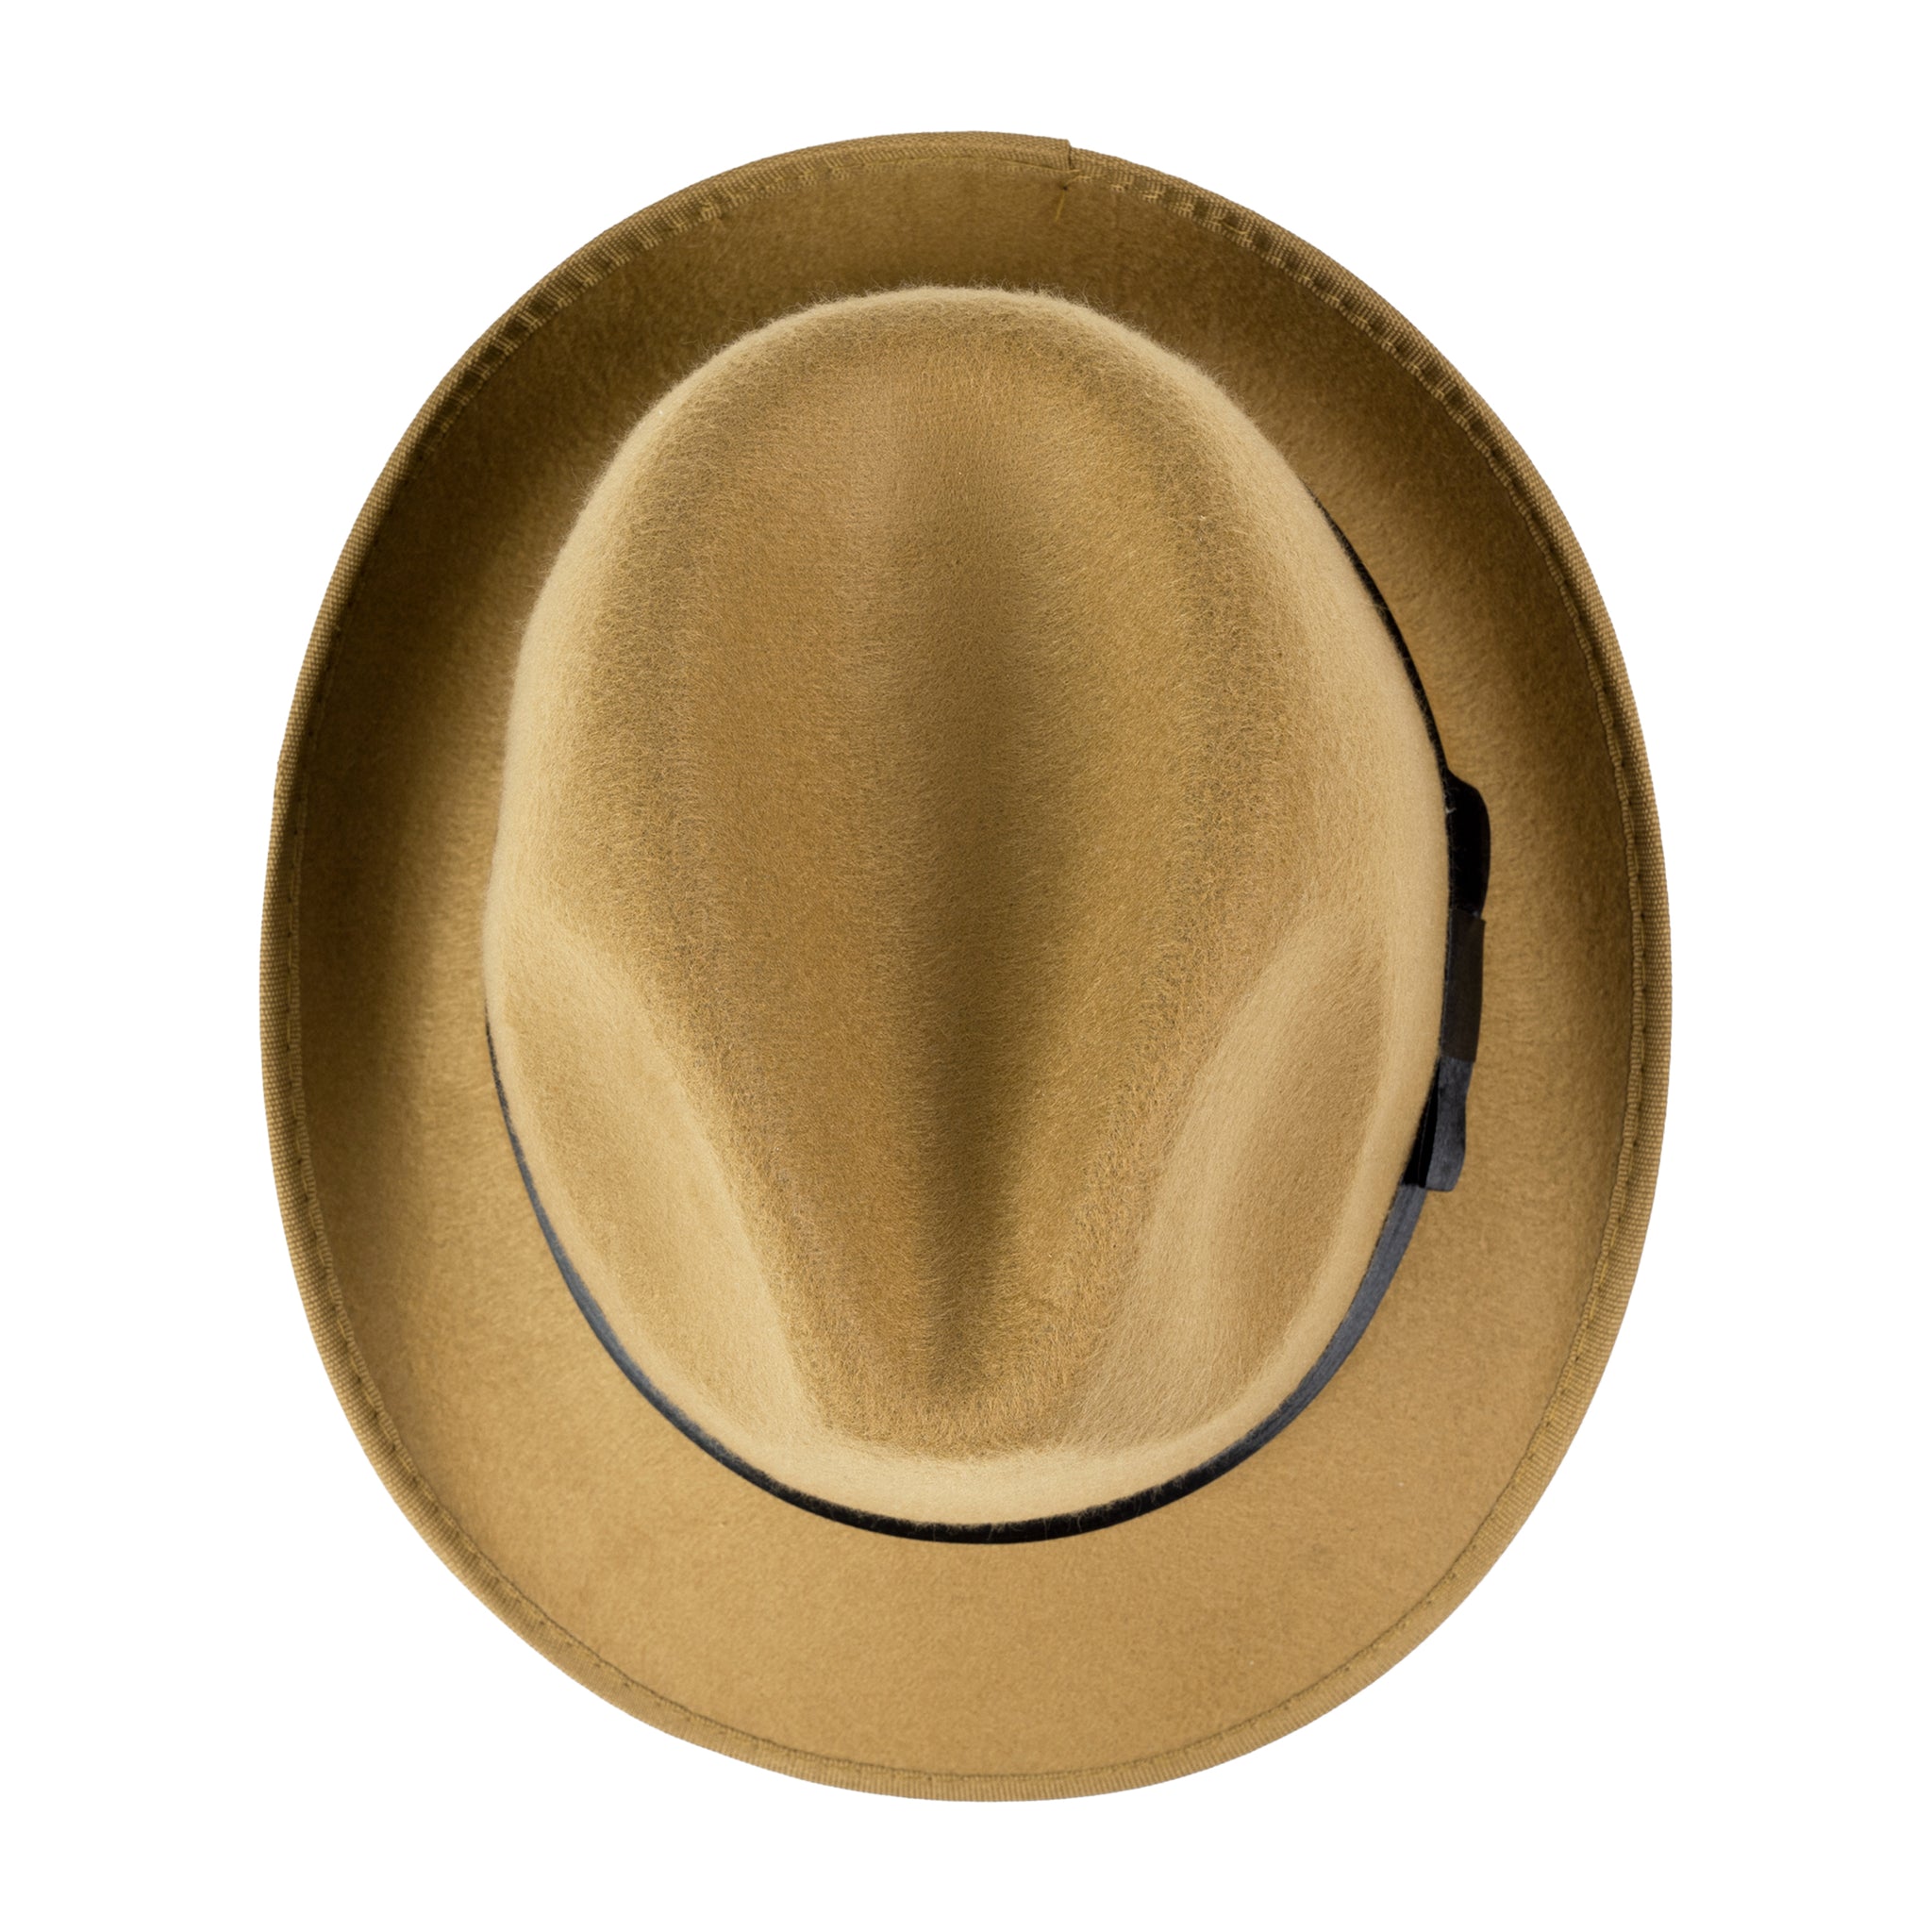 Chokore Vintage Fedora Hat with Short Brim (Camel)